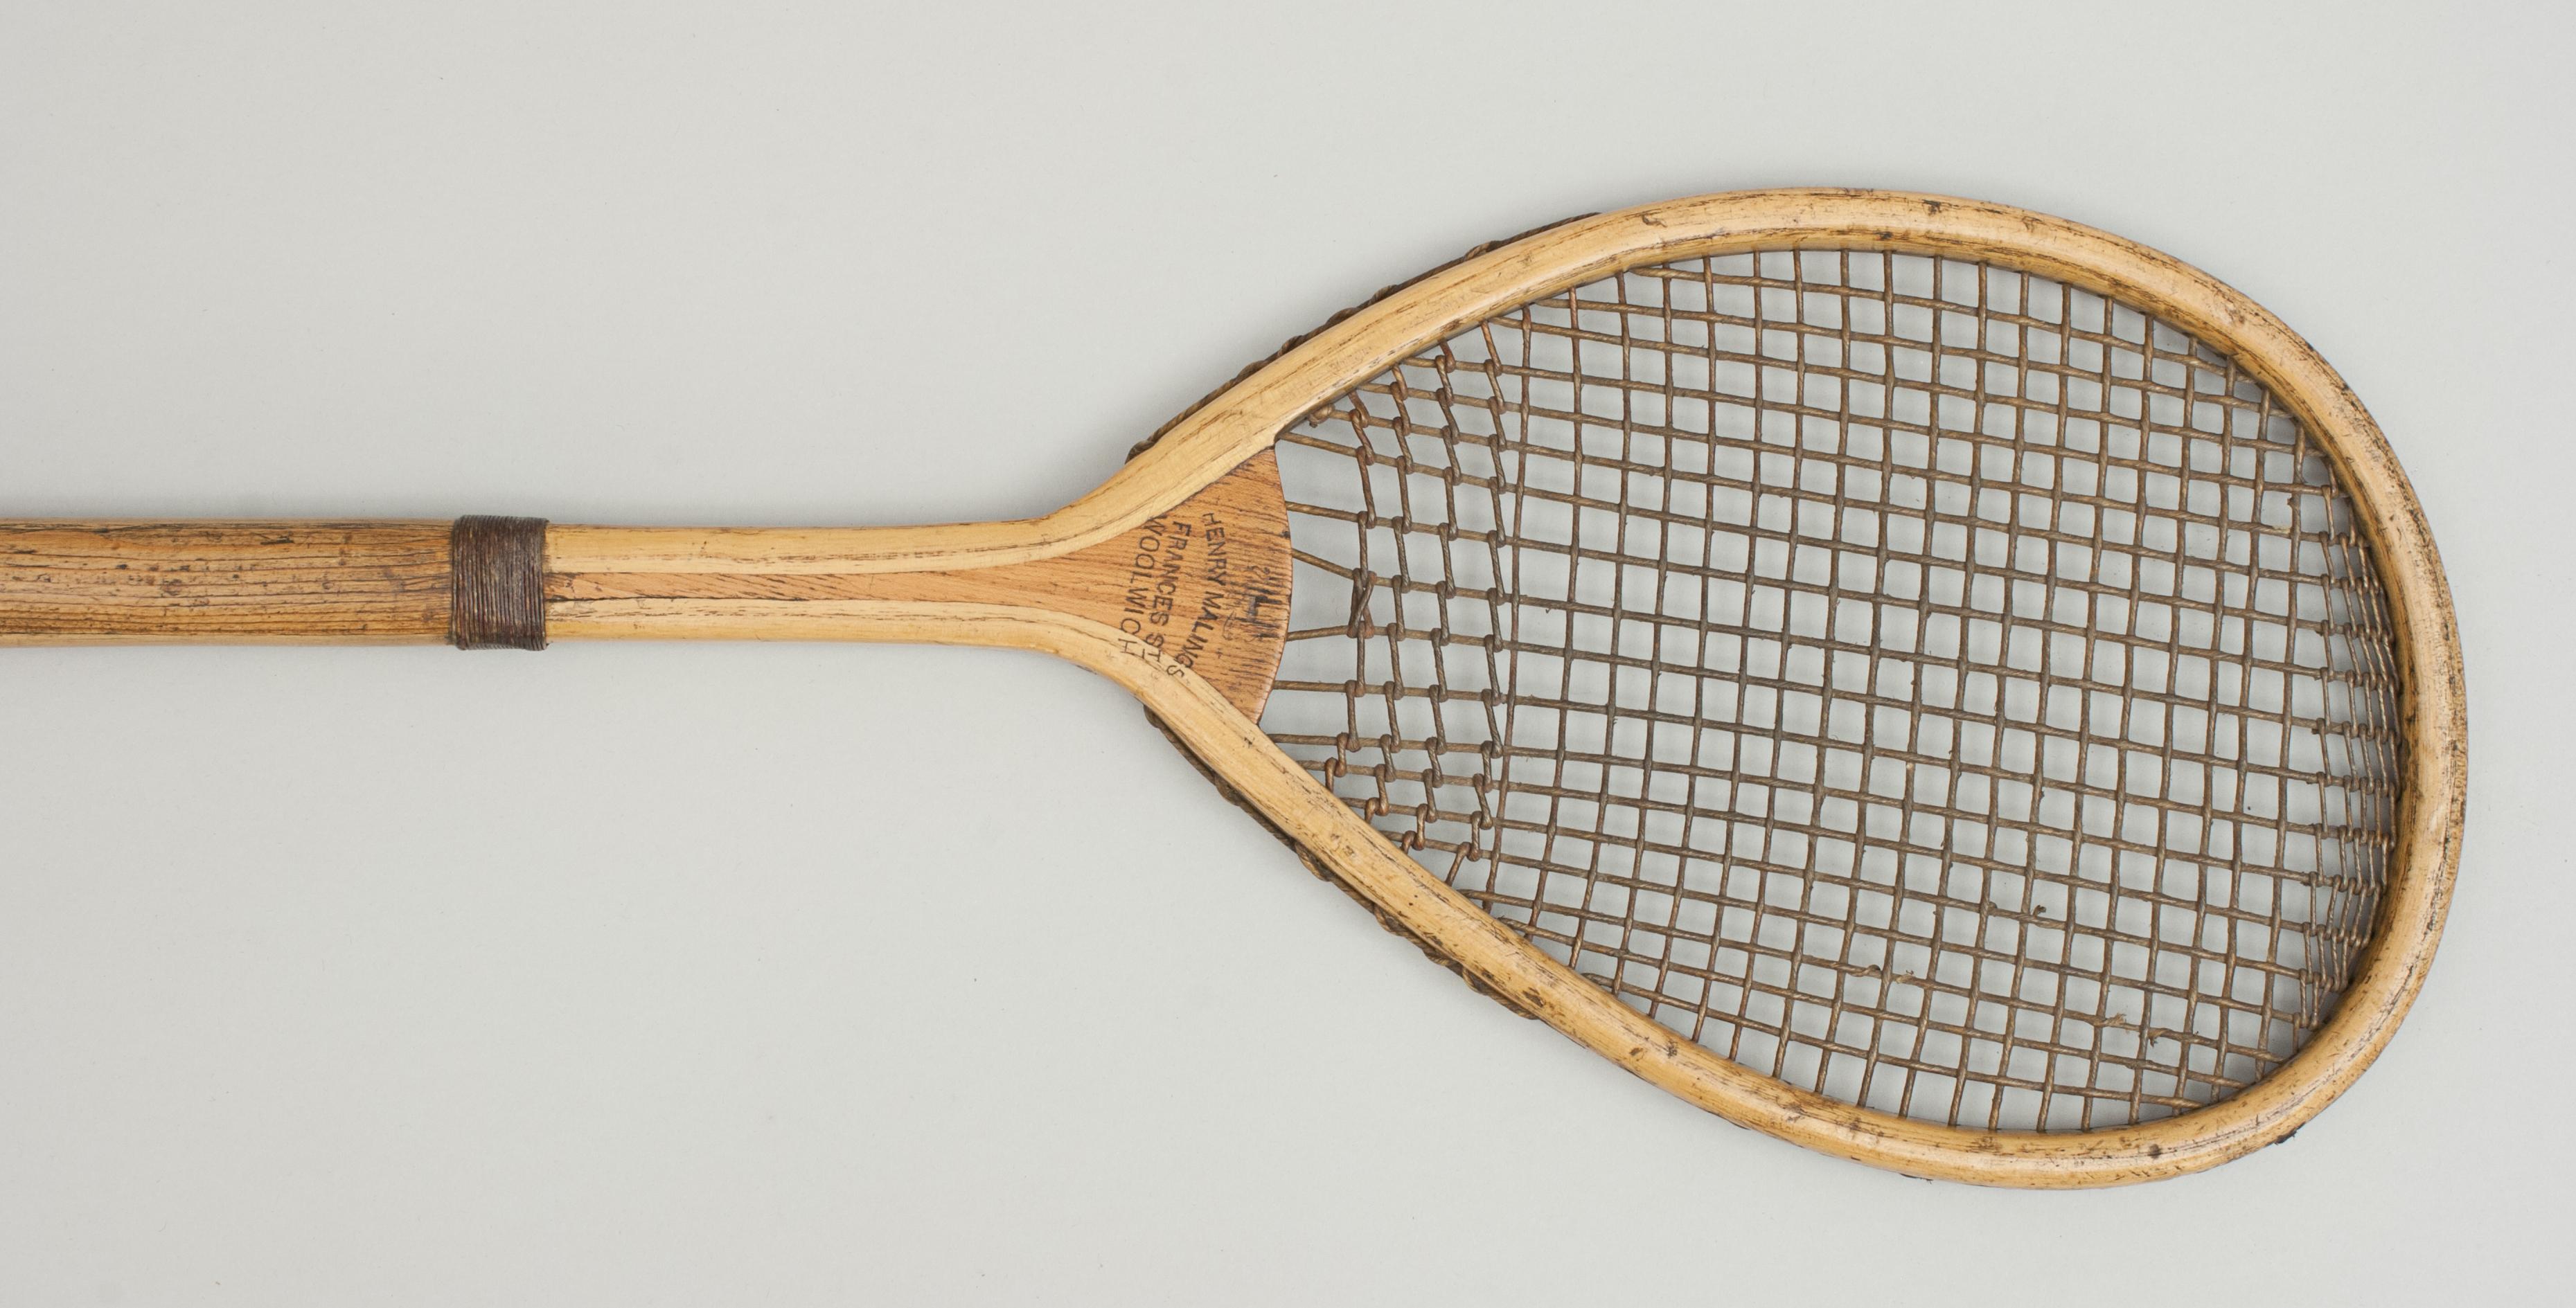 Sporting Art Antique Lopsided Henry Malings Tennis Racket, 19th Century